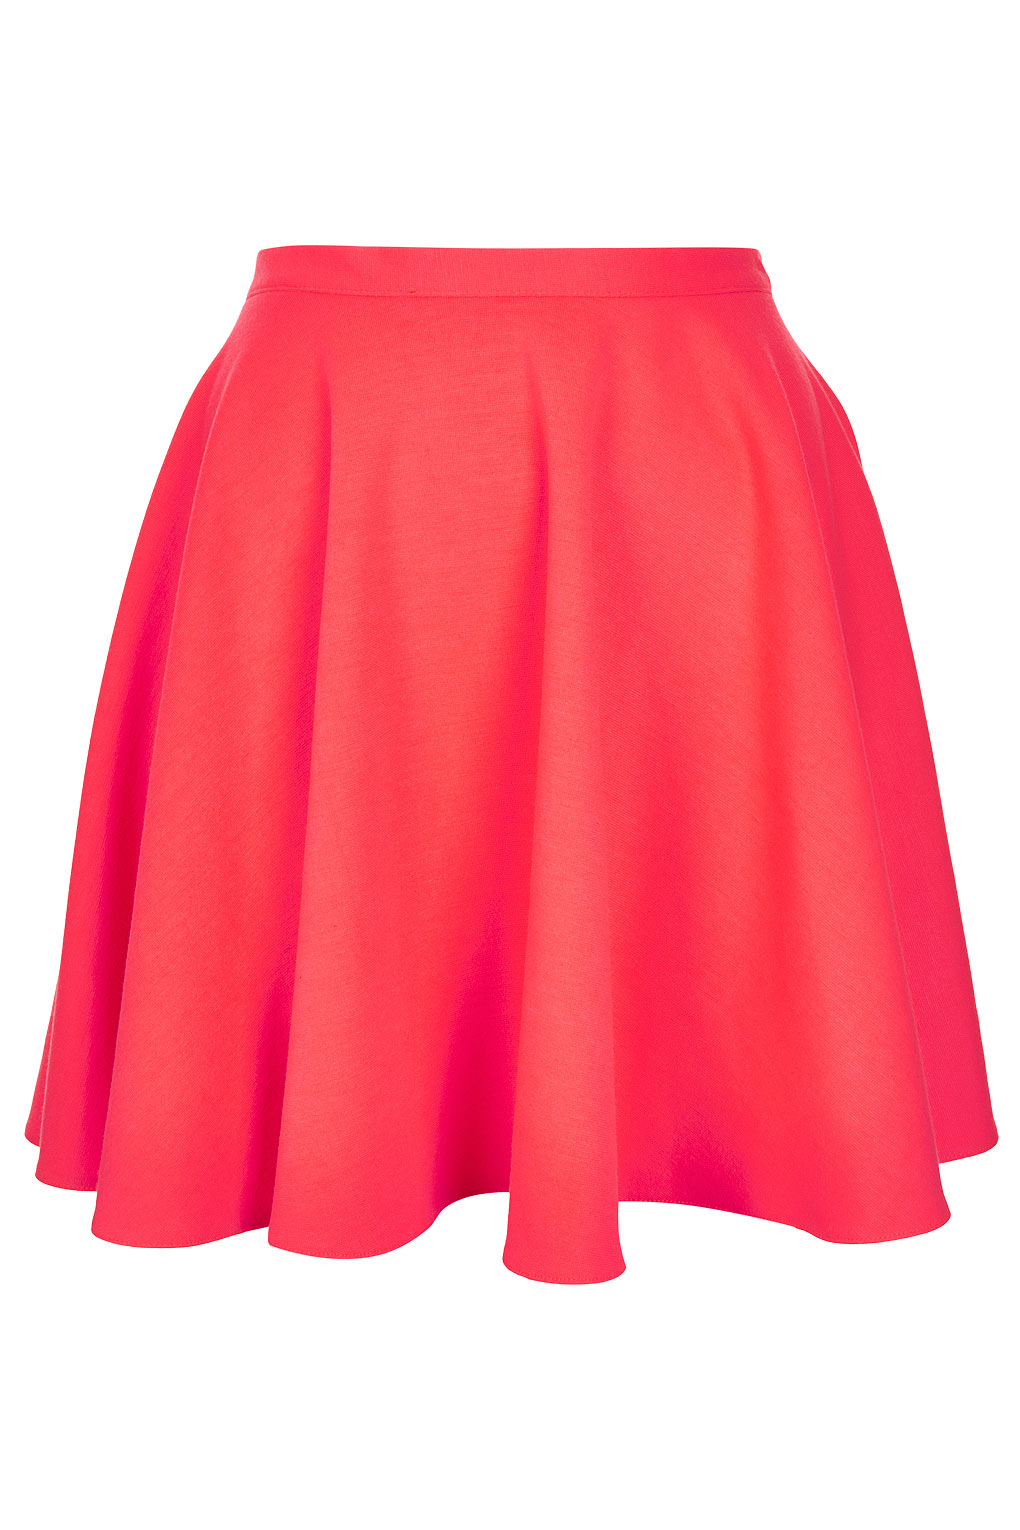 Lyst Topshop Fluro Pink  Skater Skirt  in Pink 